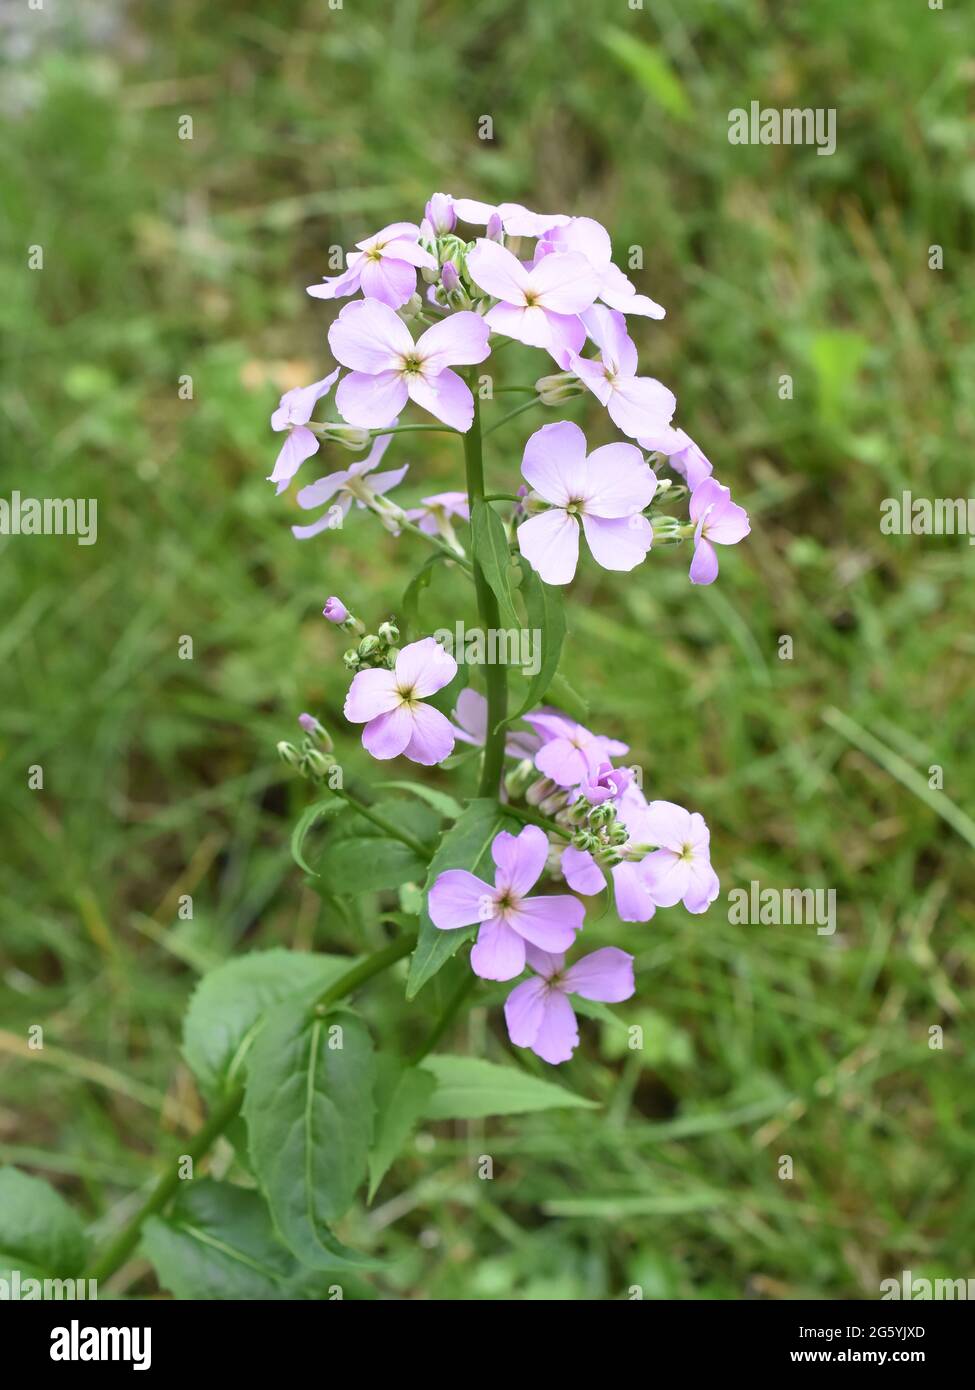 Dame's rocket Hesperis matronalis invasive plant purple flowers Stock Photo